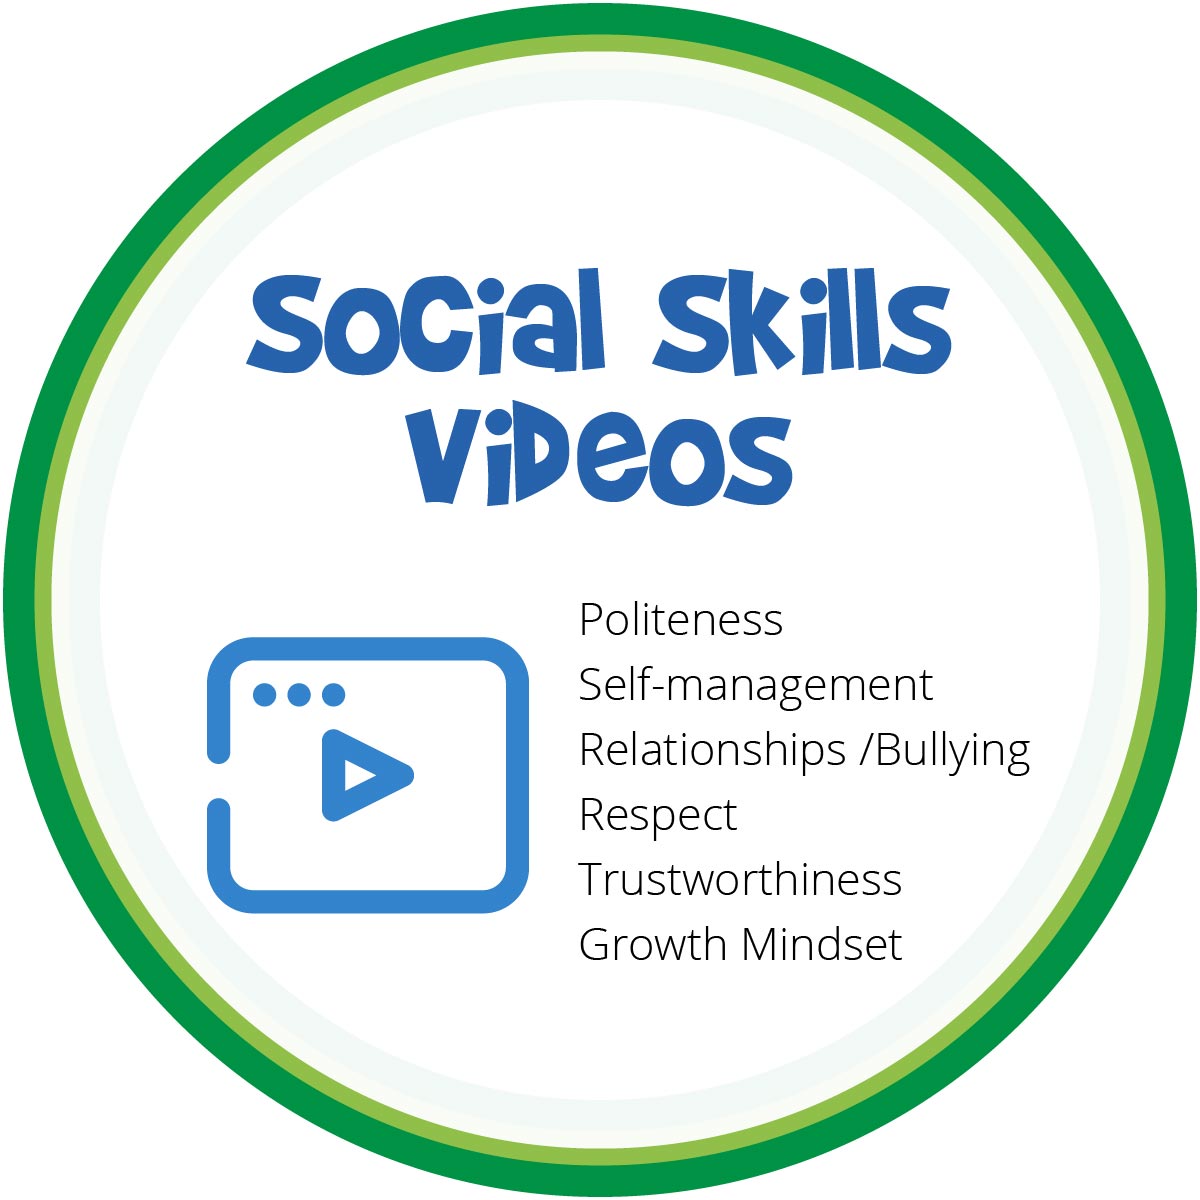 Videos for teaching social skills